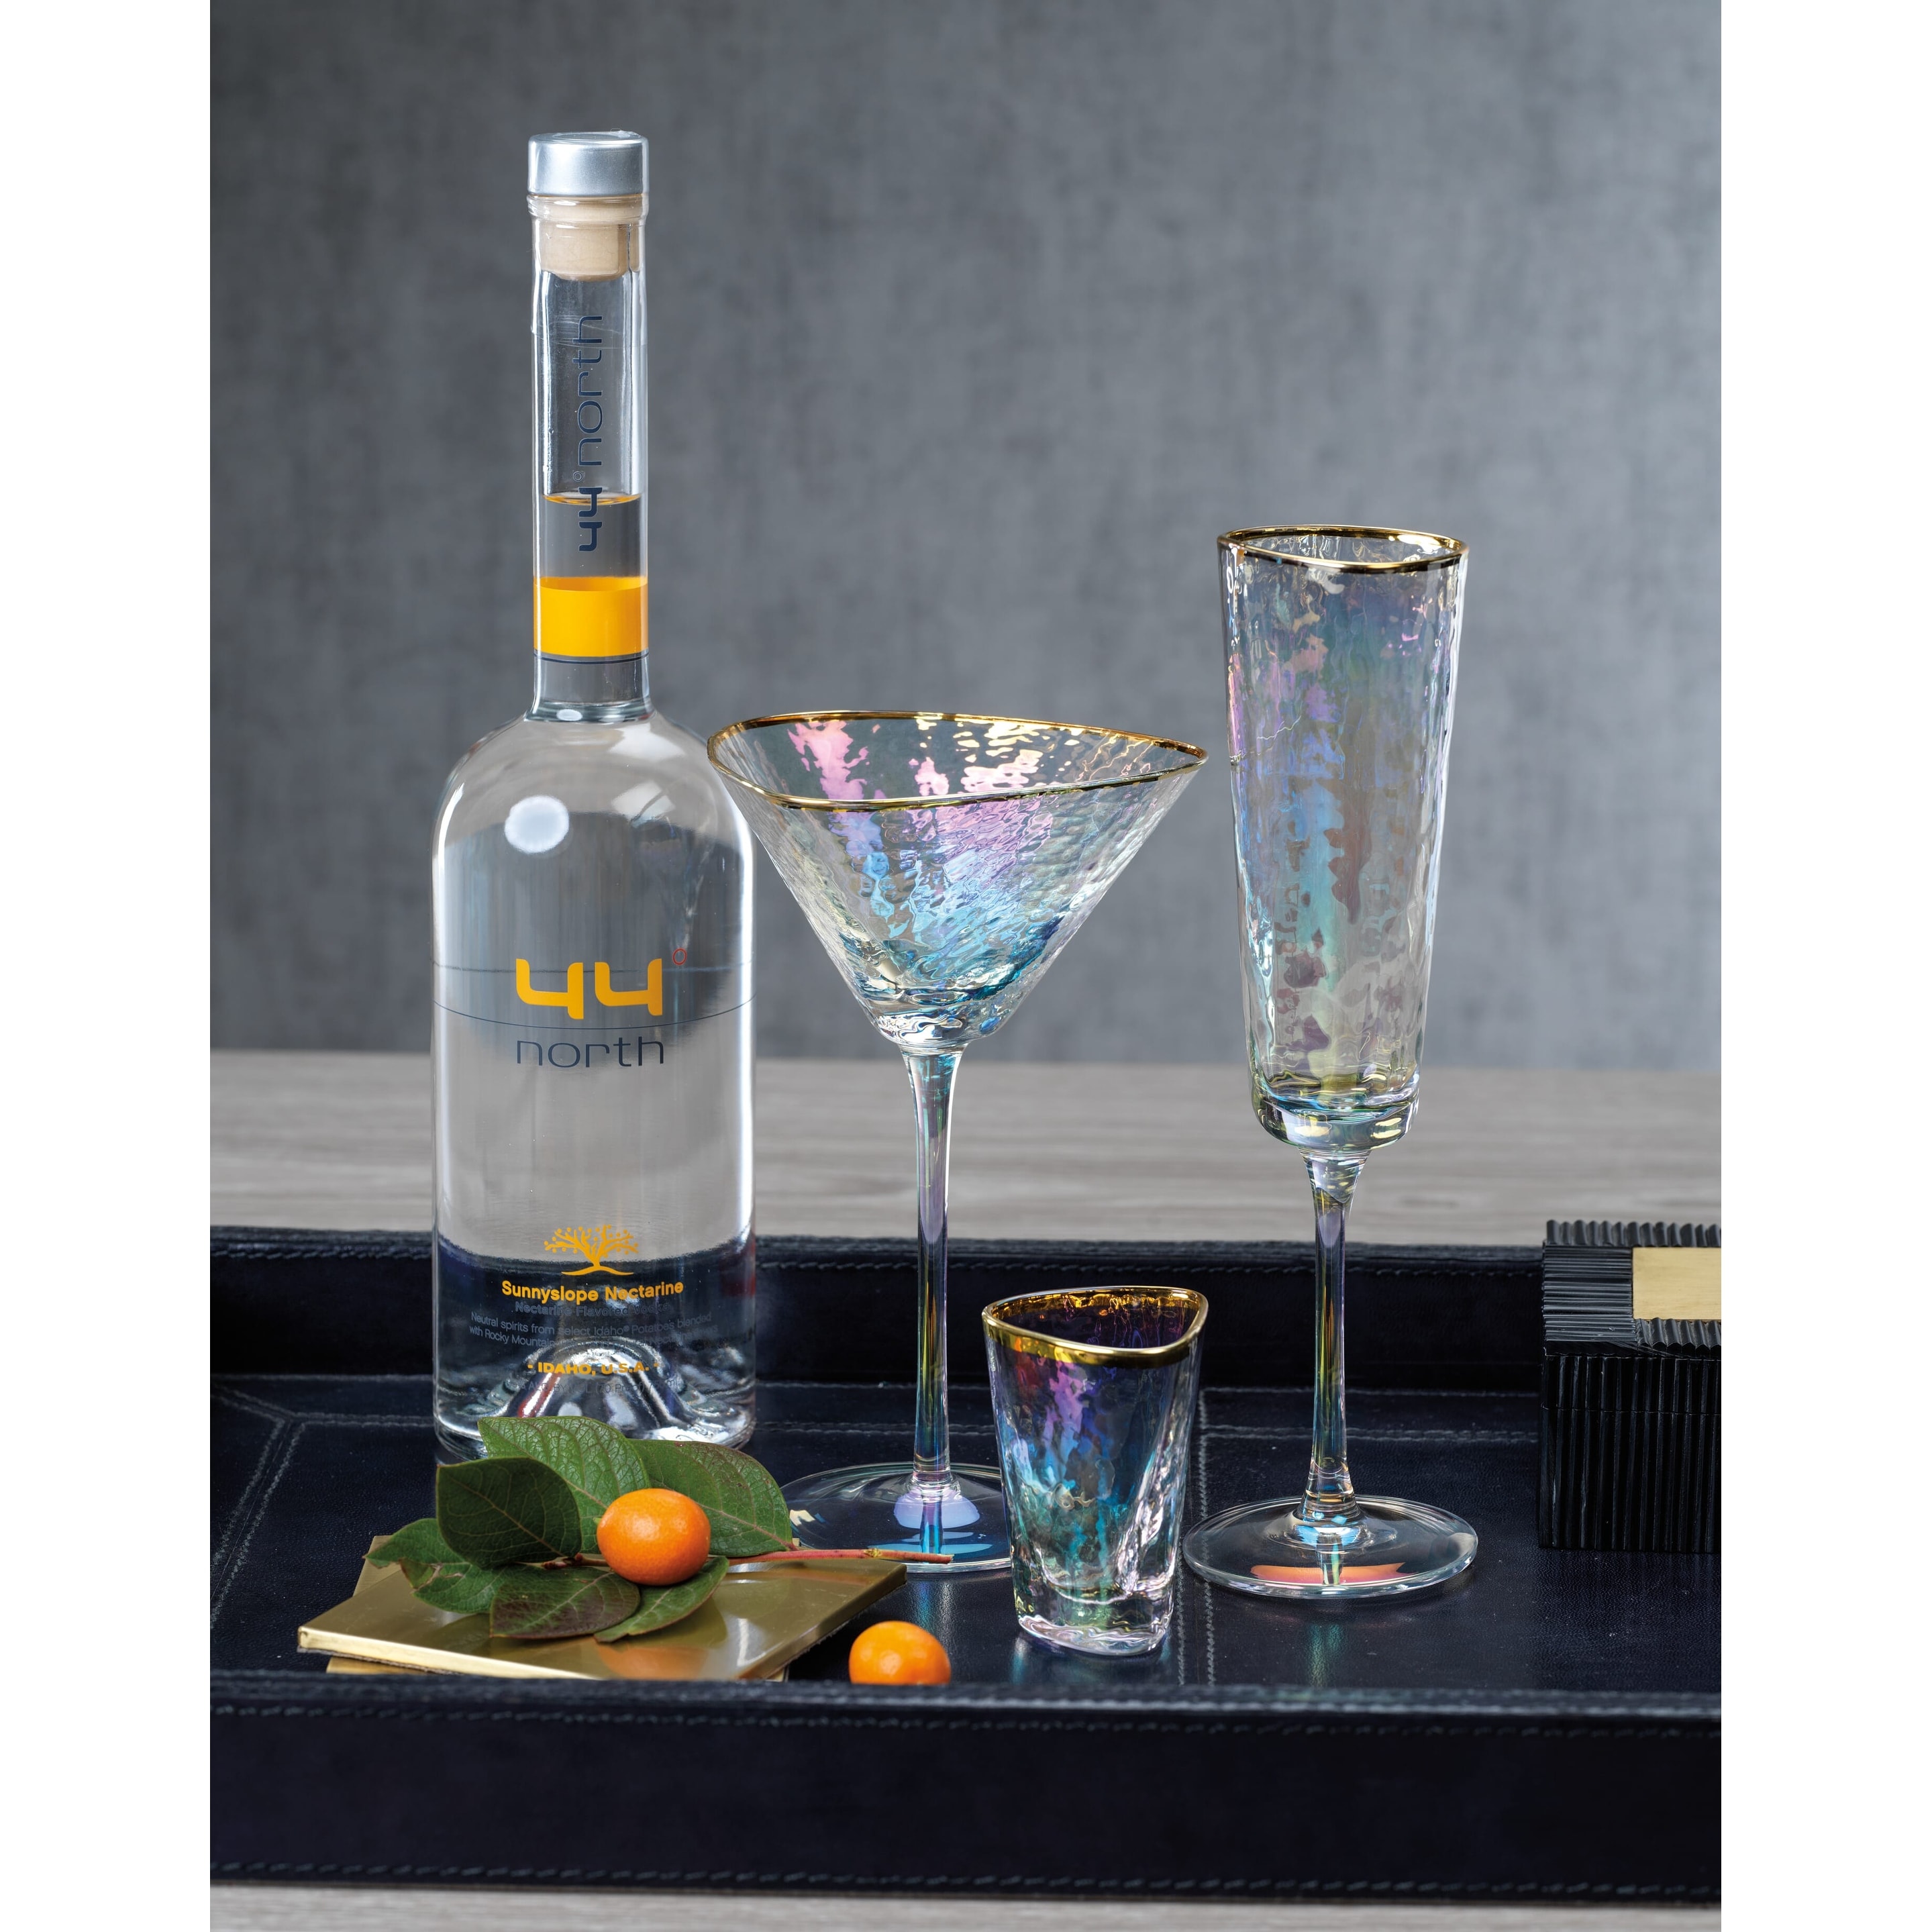 Aurelian Short Martini Glass